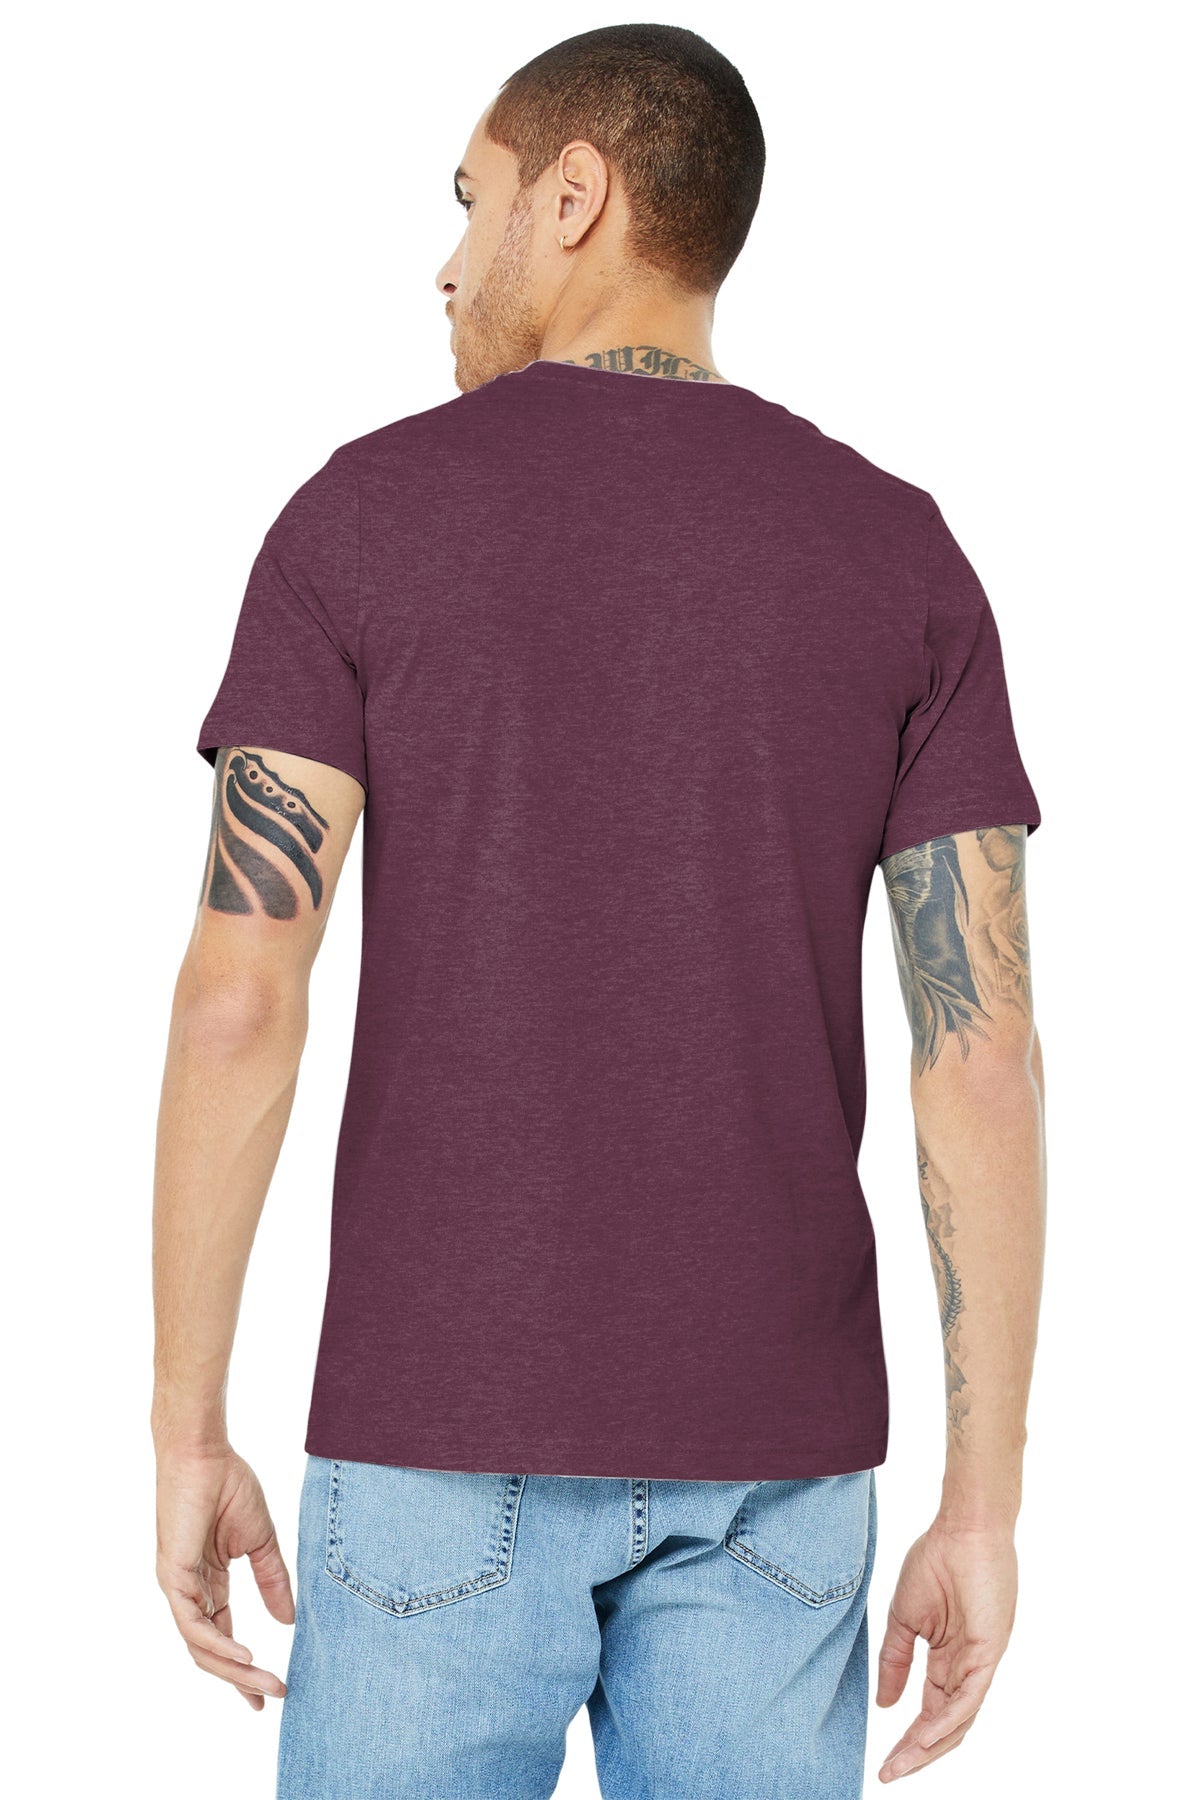 bella + canvas unisex jersey short sleeve t-shirt 3001c heather maroon